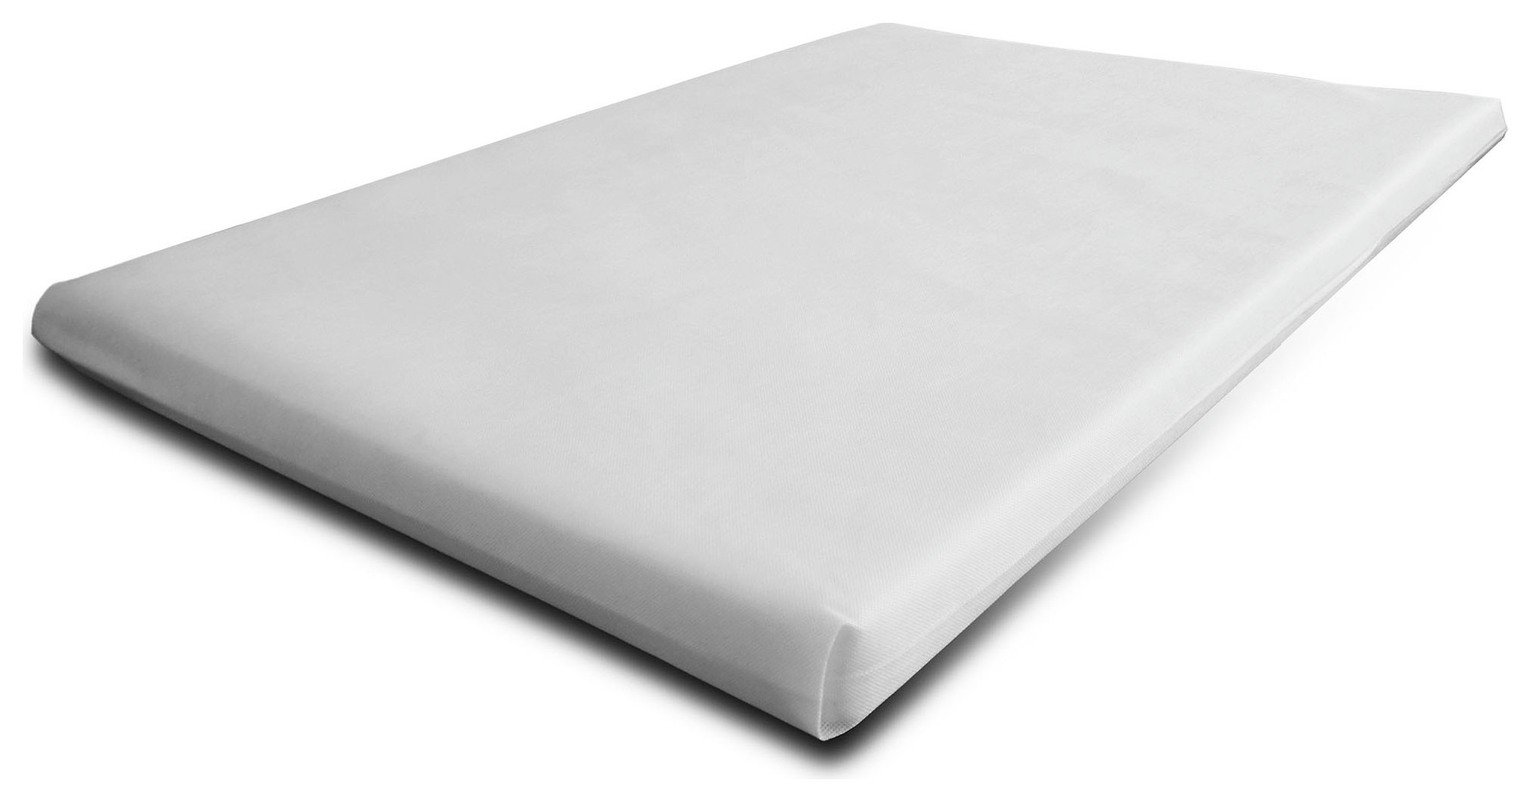 cot bed foam mattress